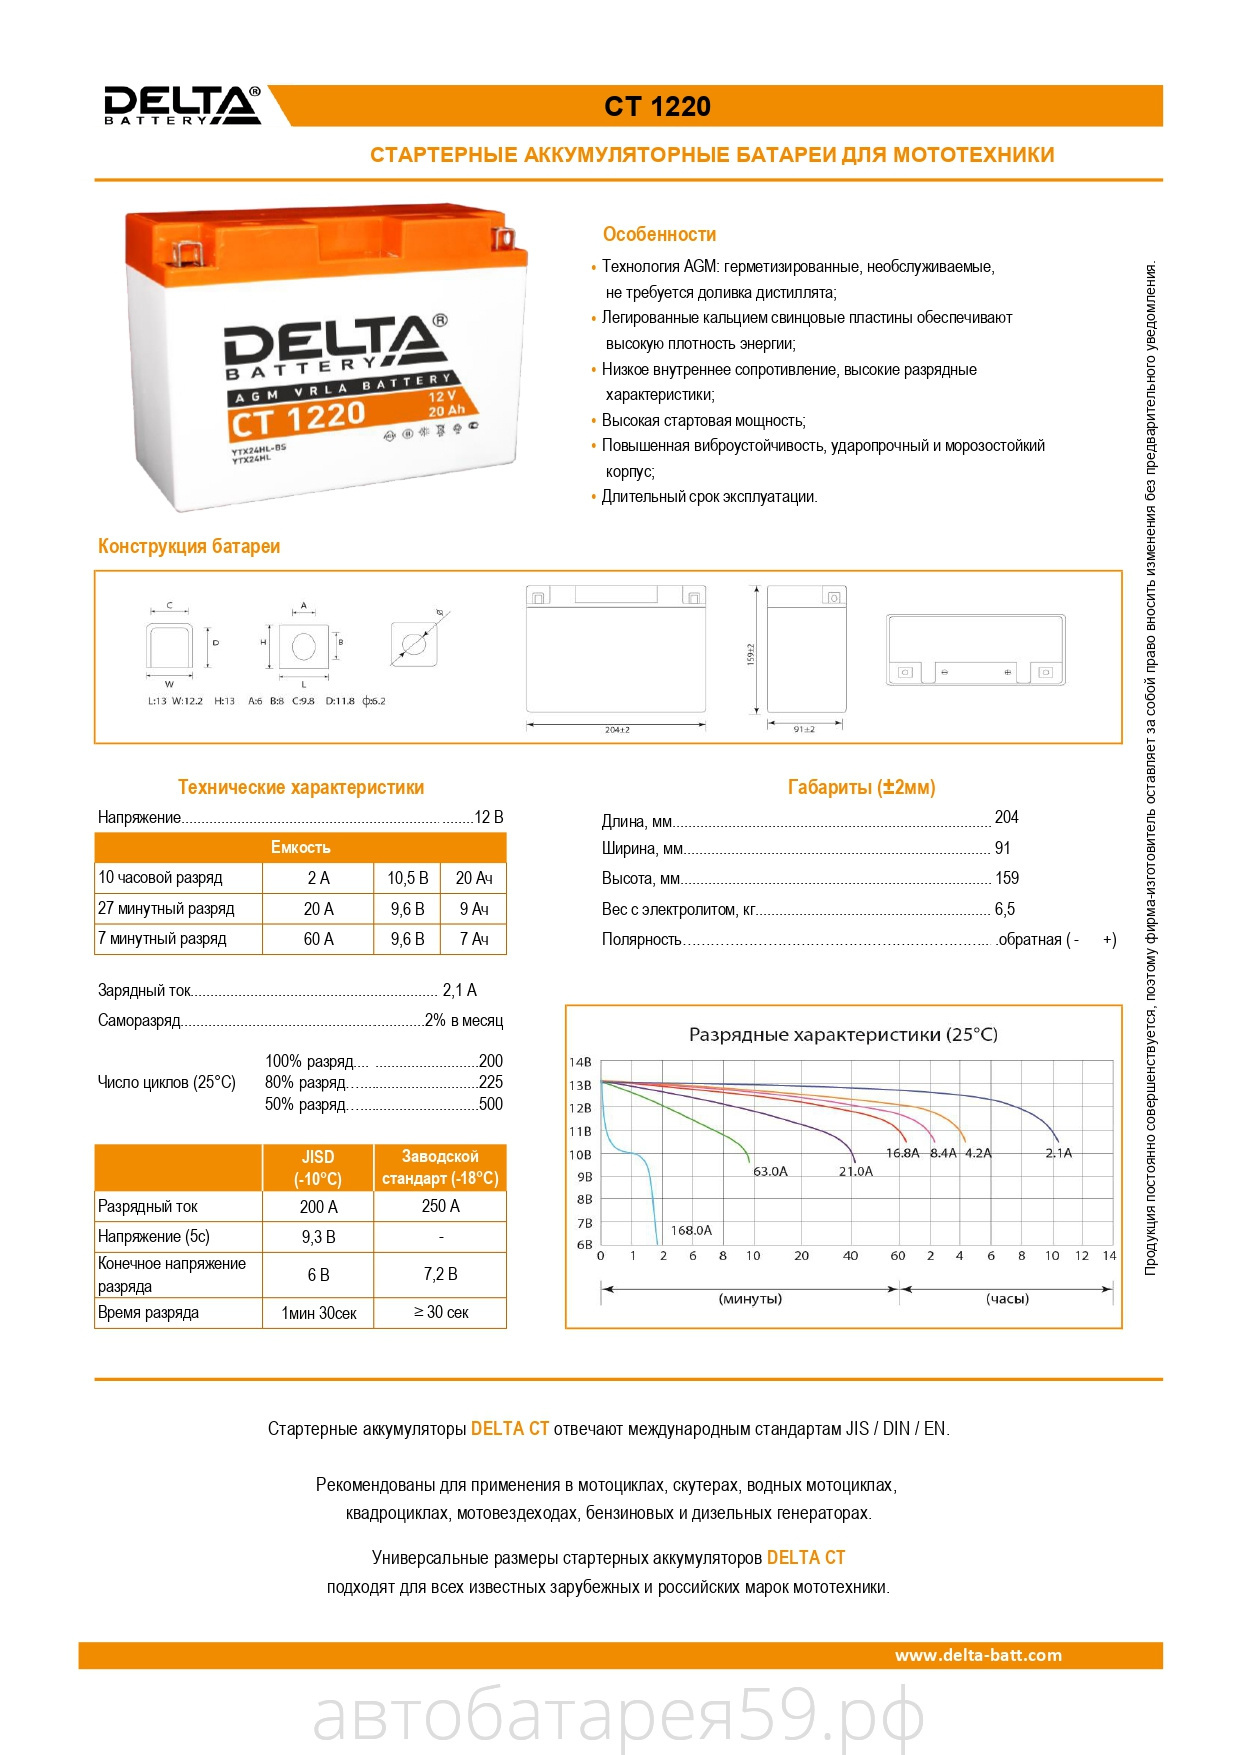 аккумулятор delta ct 1220 